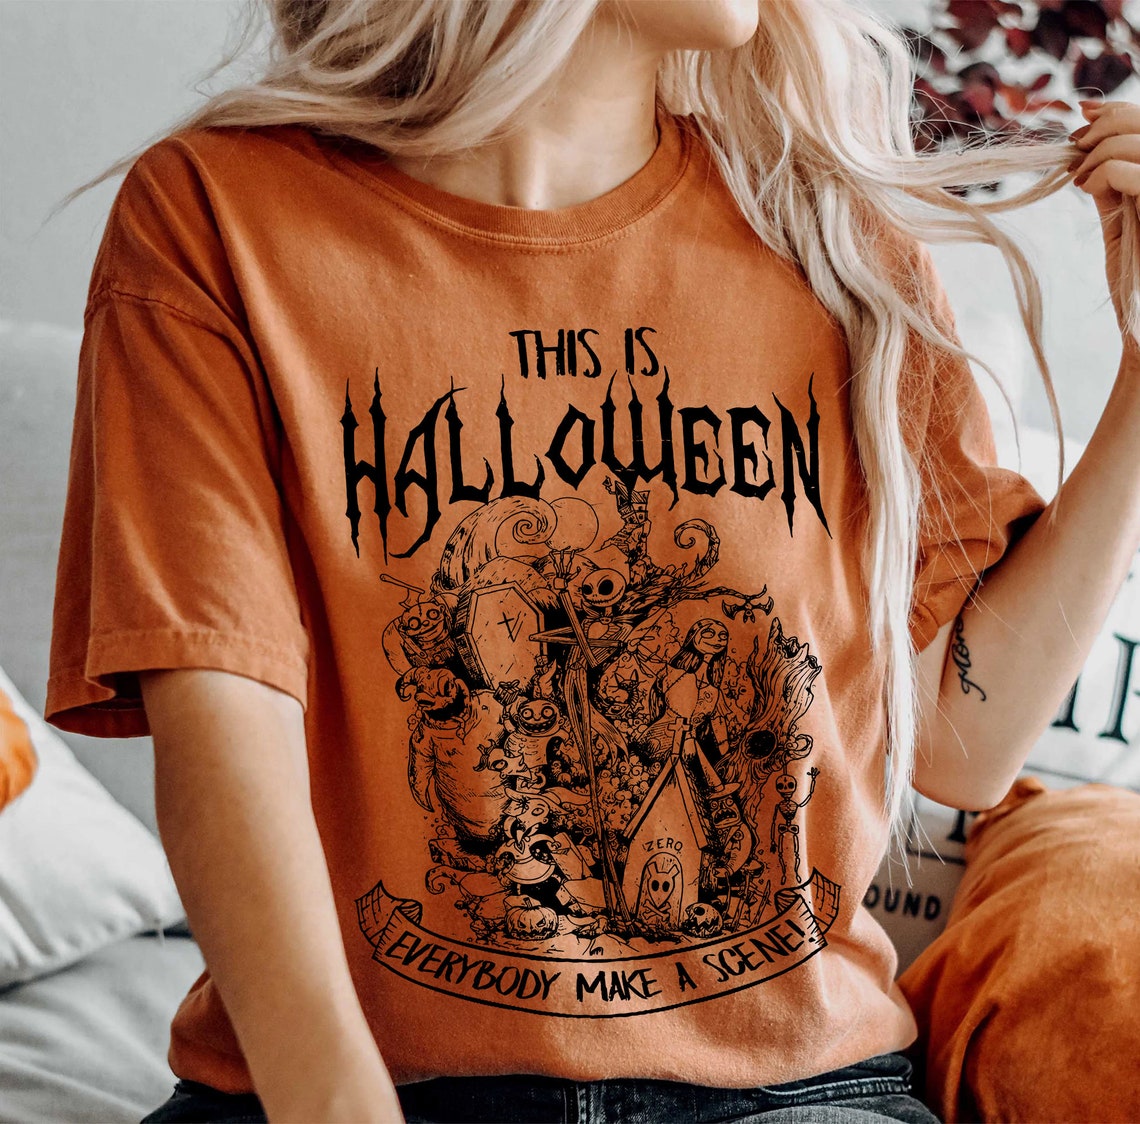 This Is Halloween Everybody Make A Scene Shirt